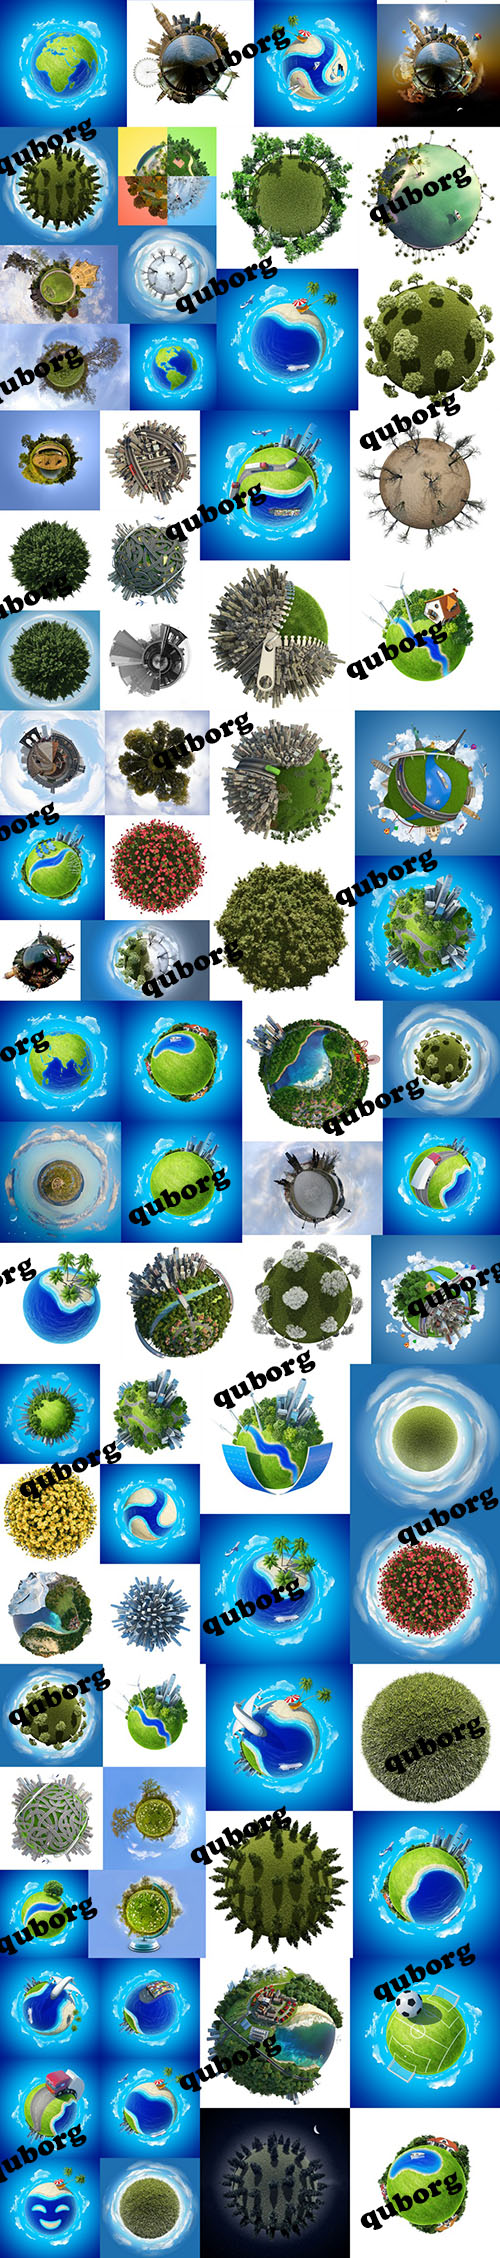 Stock Photos - Mini Planet Concept